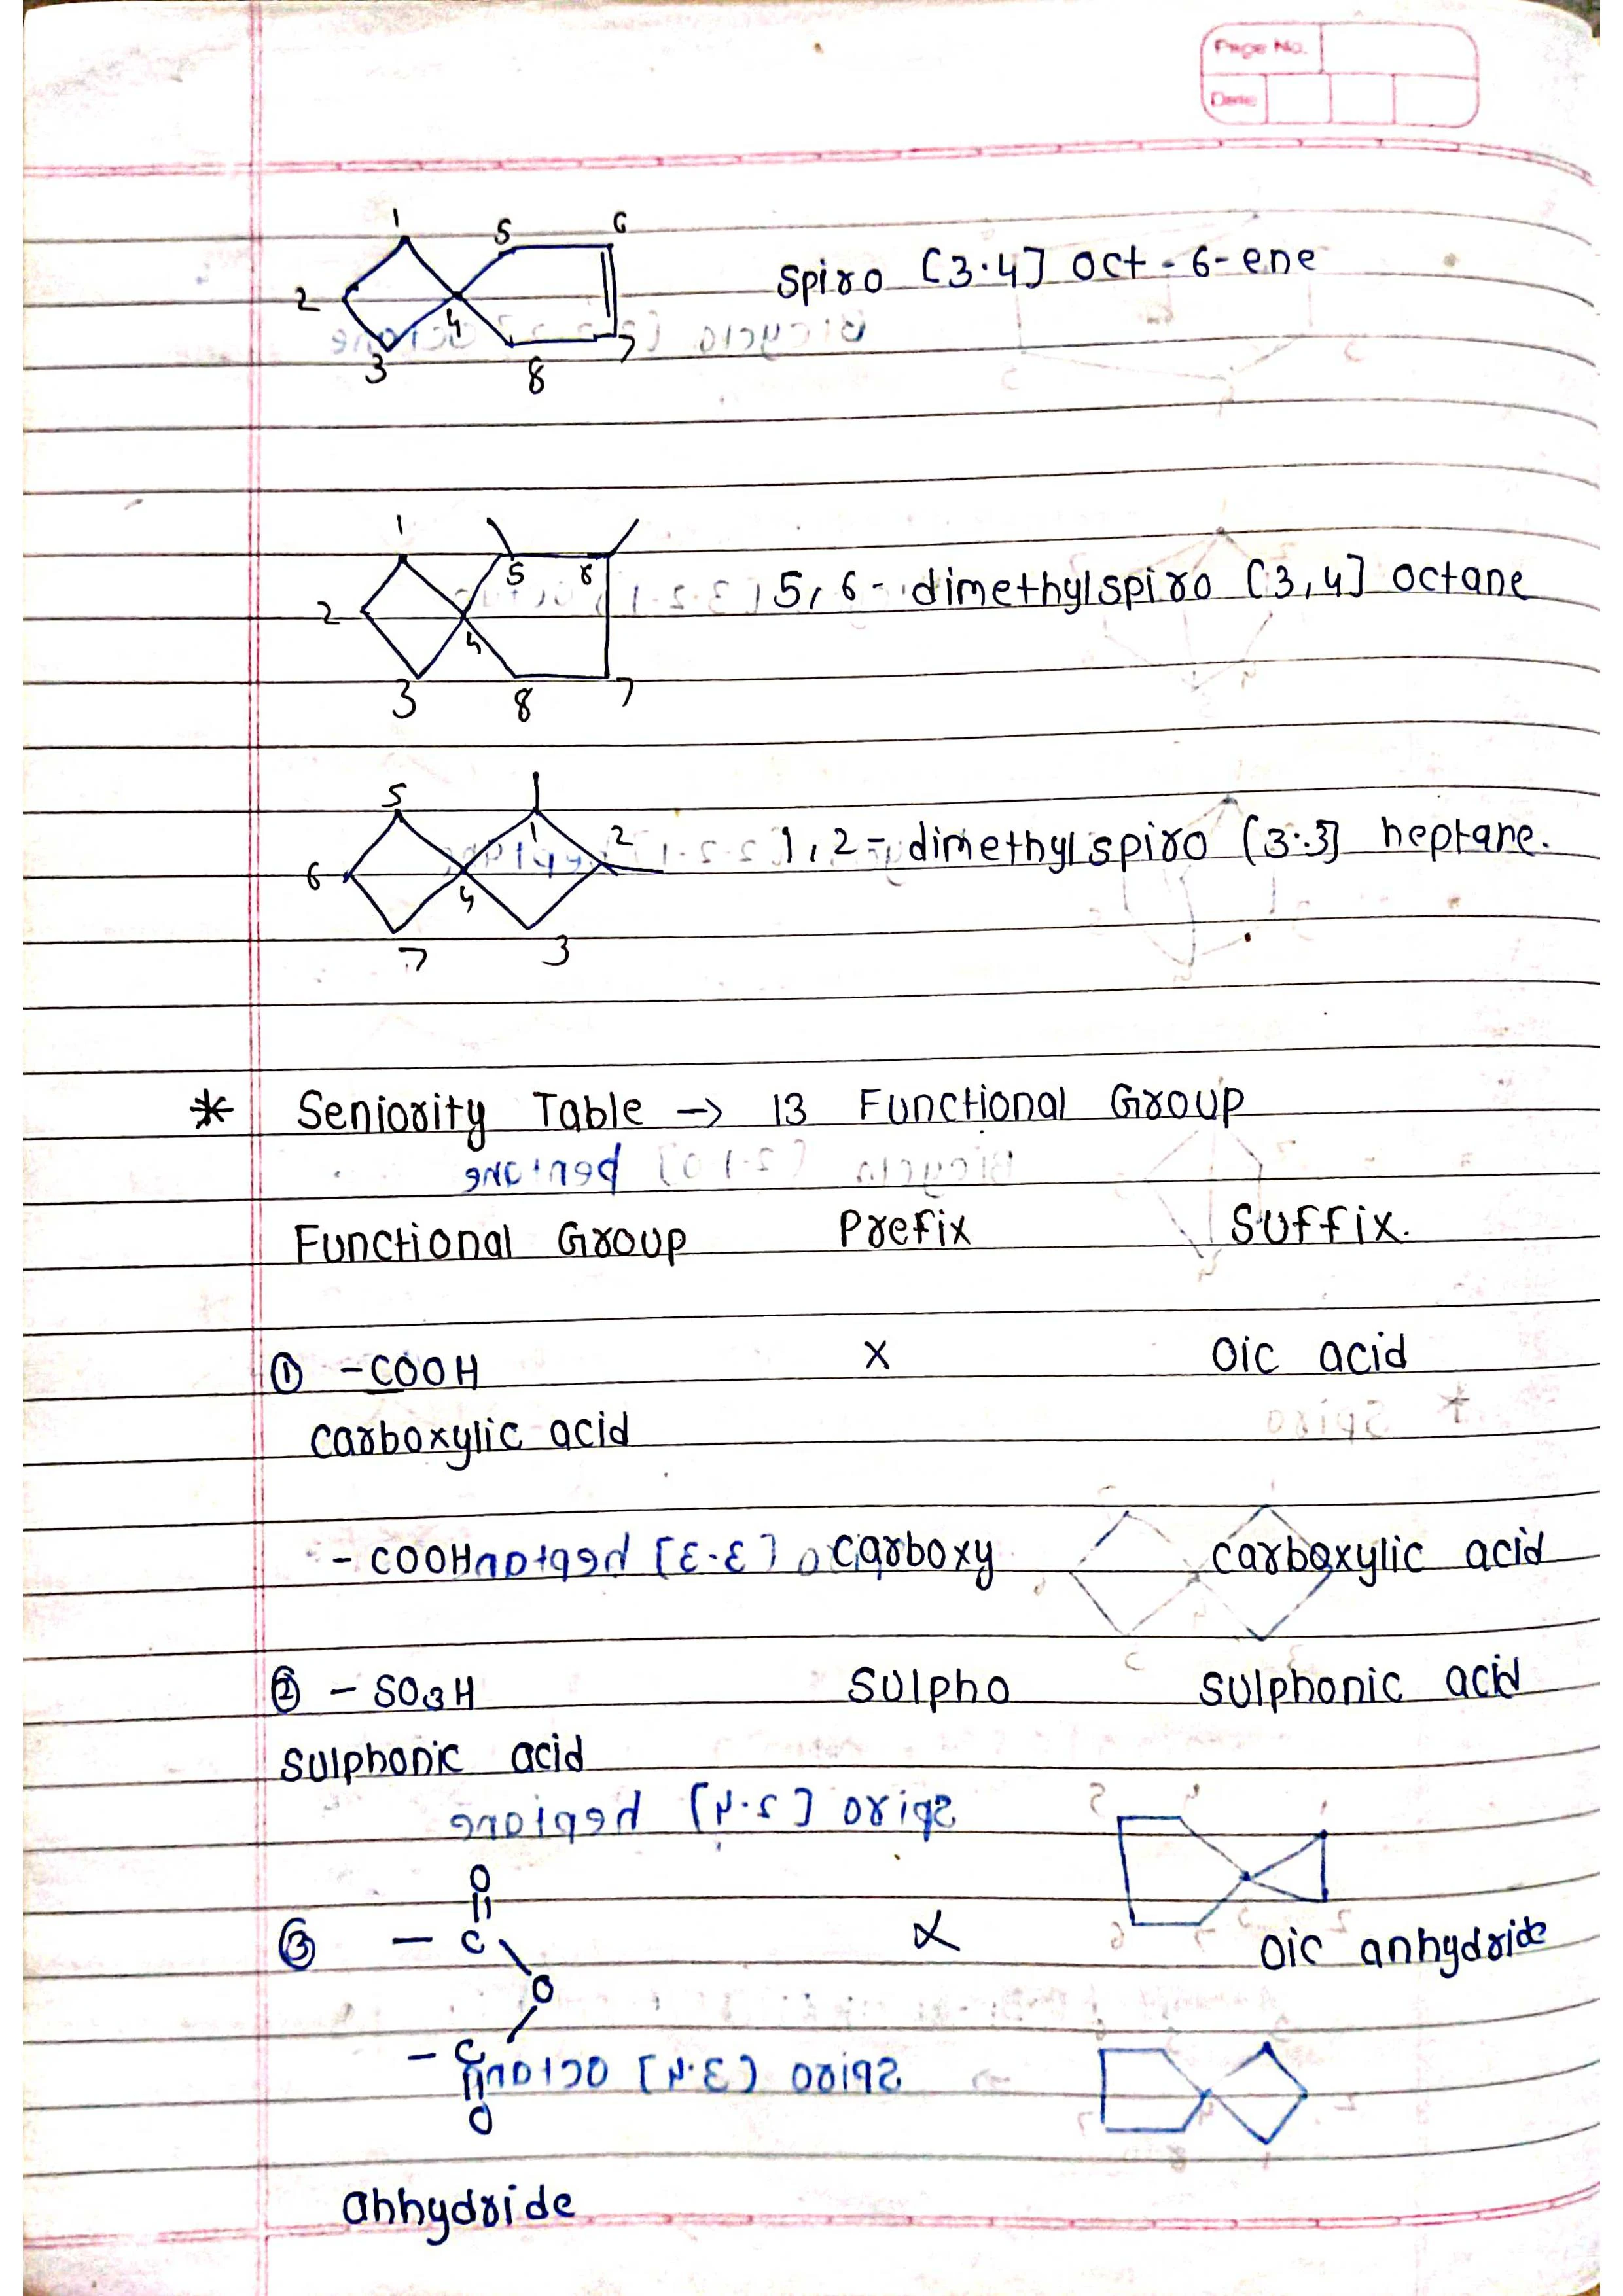 IUPAC Nomenclature - Chemistry Short Notes 📚